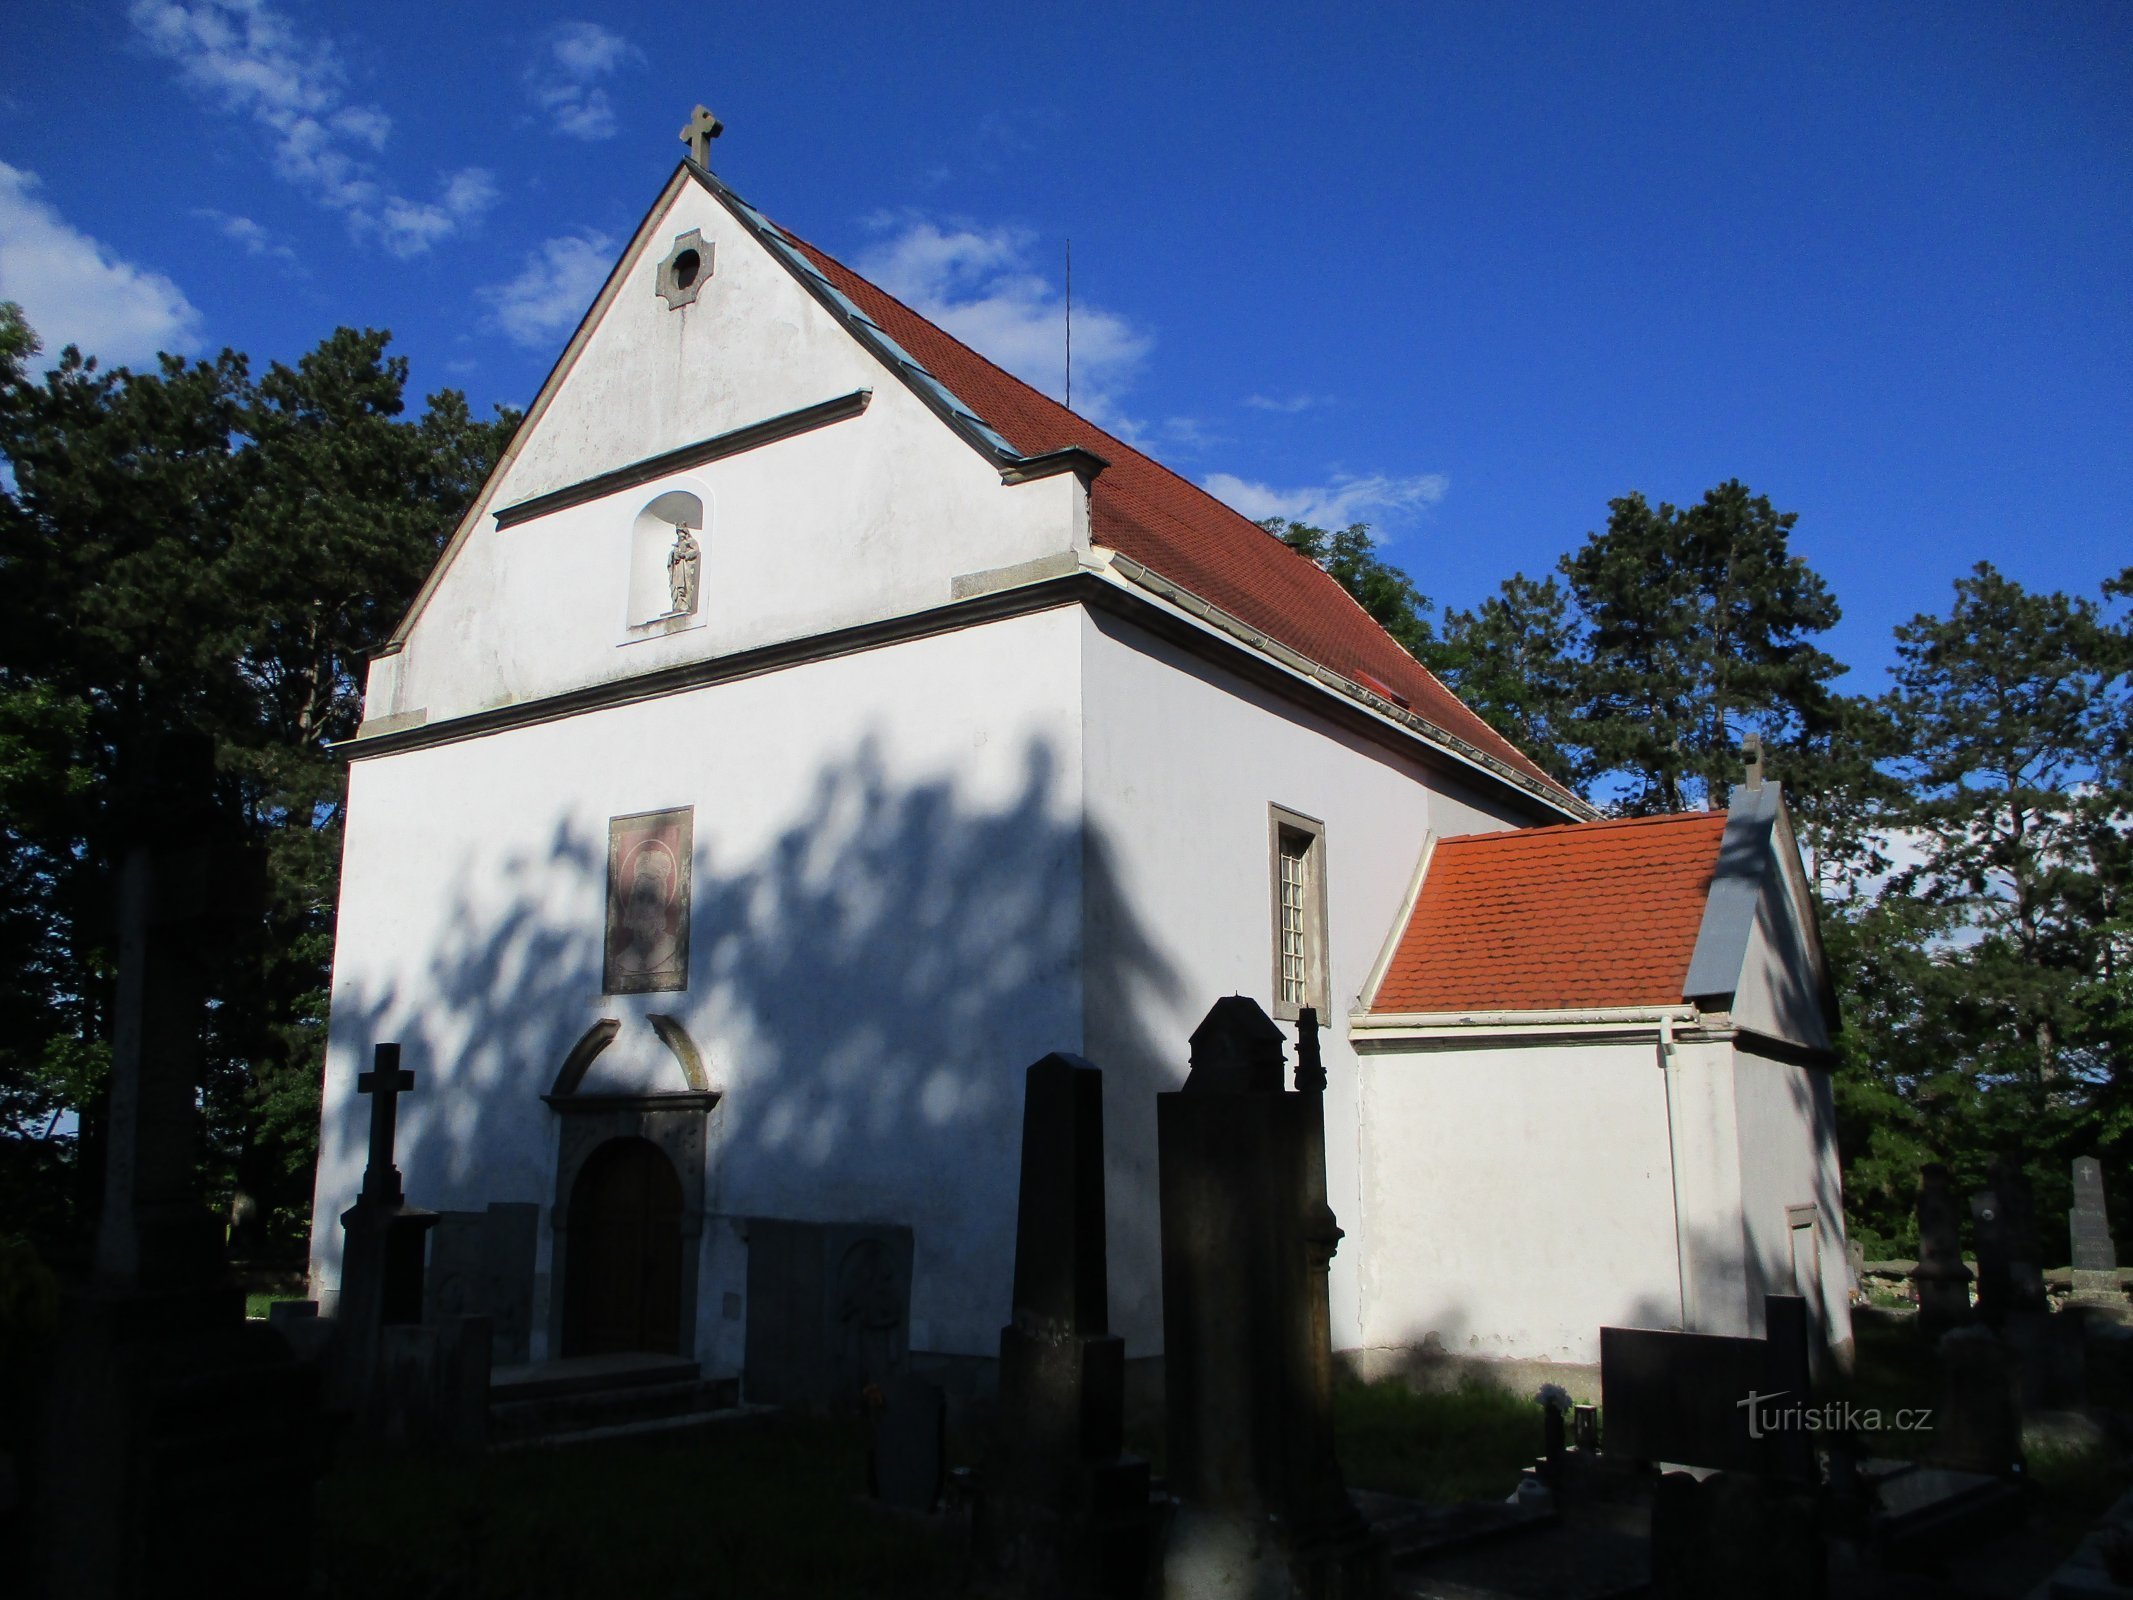 Kirche St. Wenzel (Habřina, 2.6.2019. Juni XNUMX)